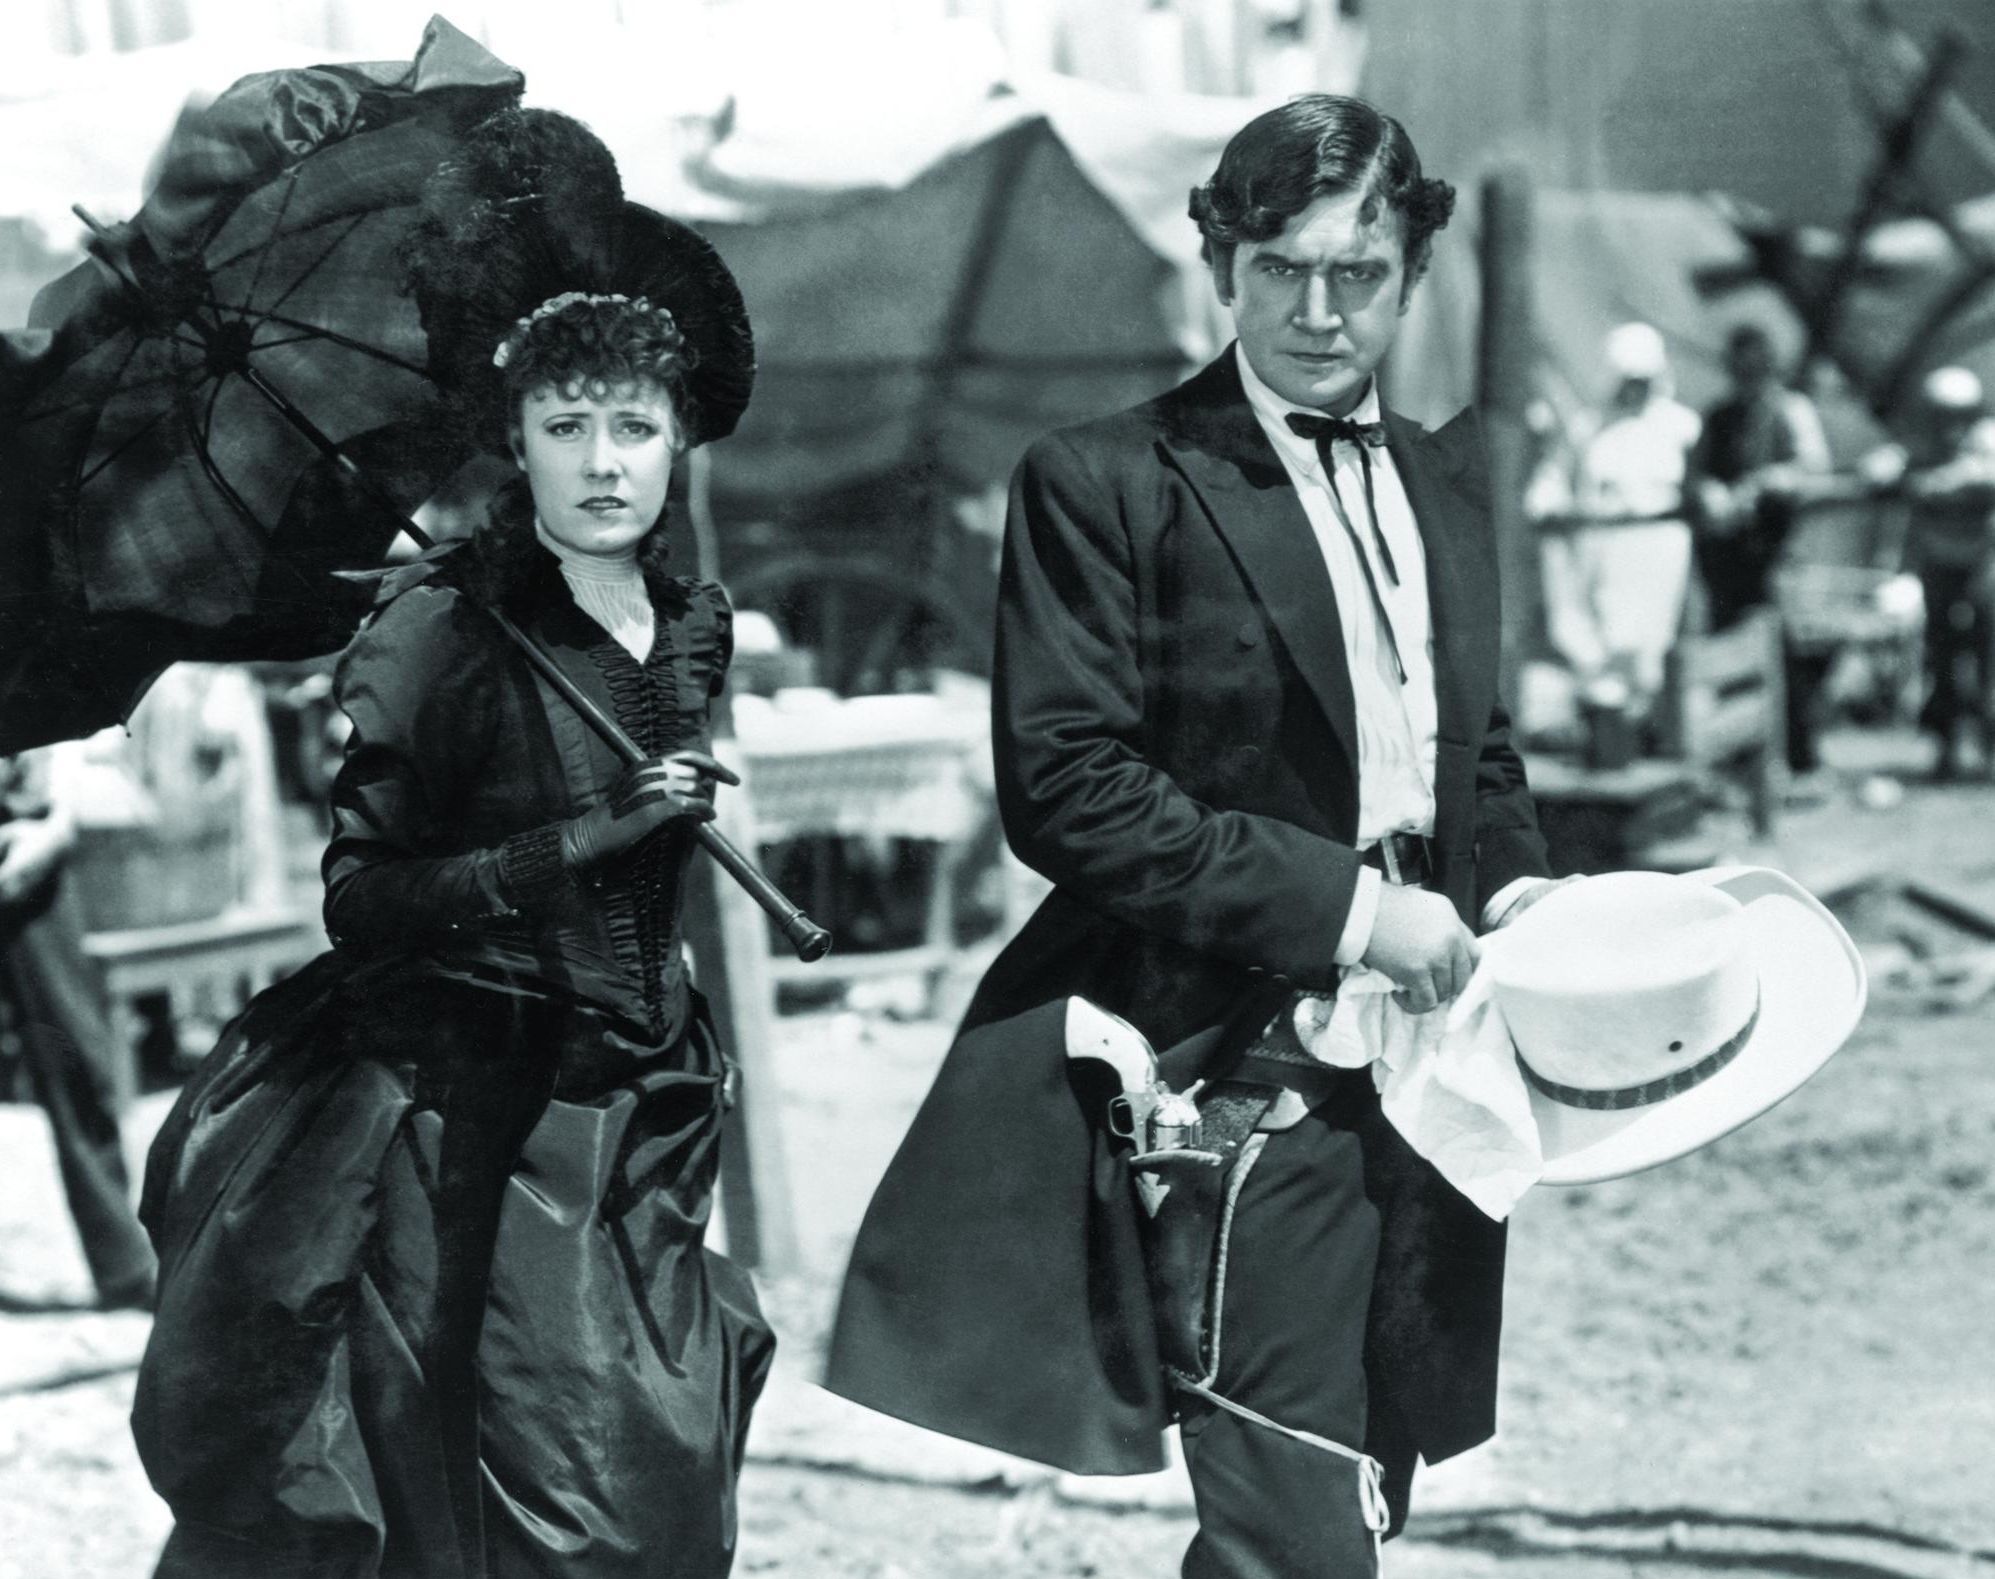 Still of Irene Dunne and Richard Dix in Cimarron (1931)